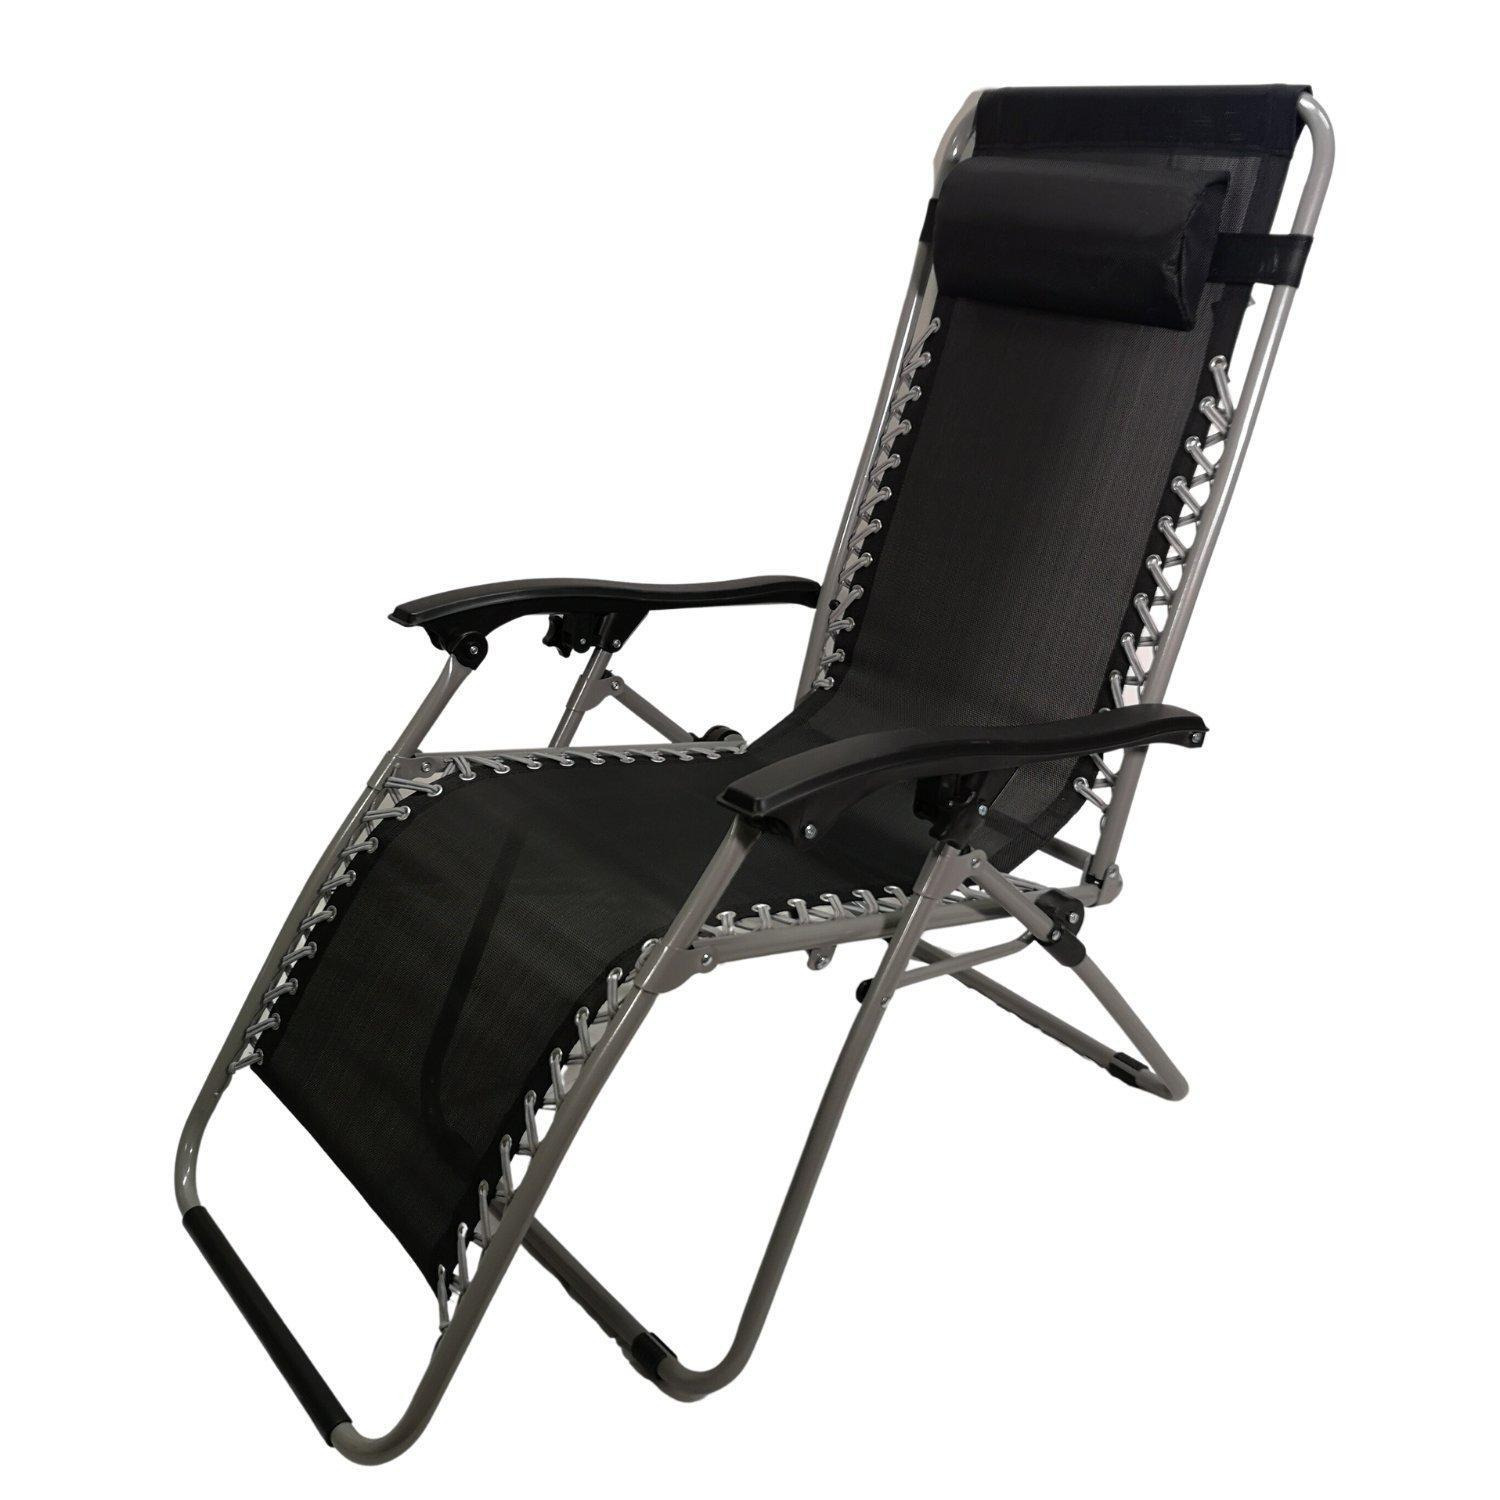 Multi Position Textoline Garden Relaxer Chair Lounger -  Black Silver Frame - image 1